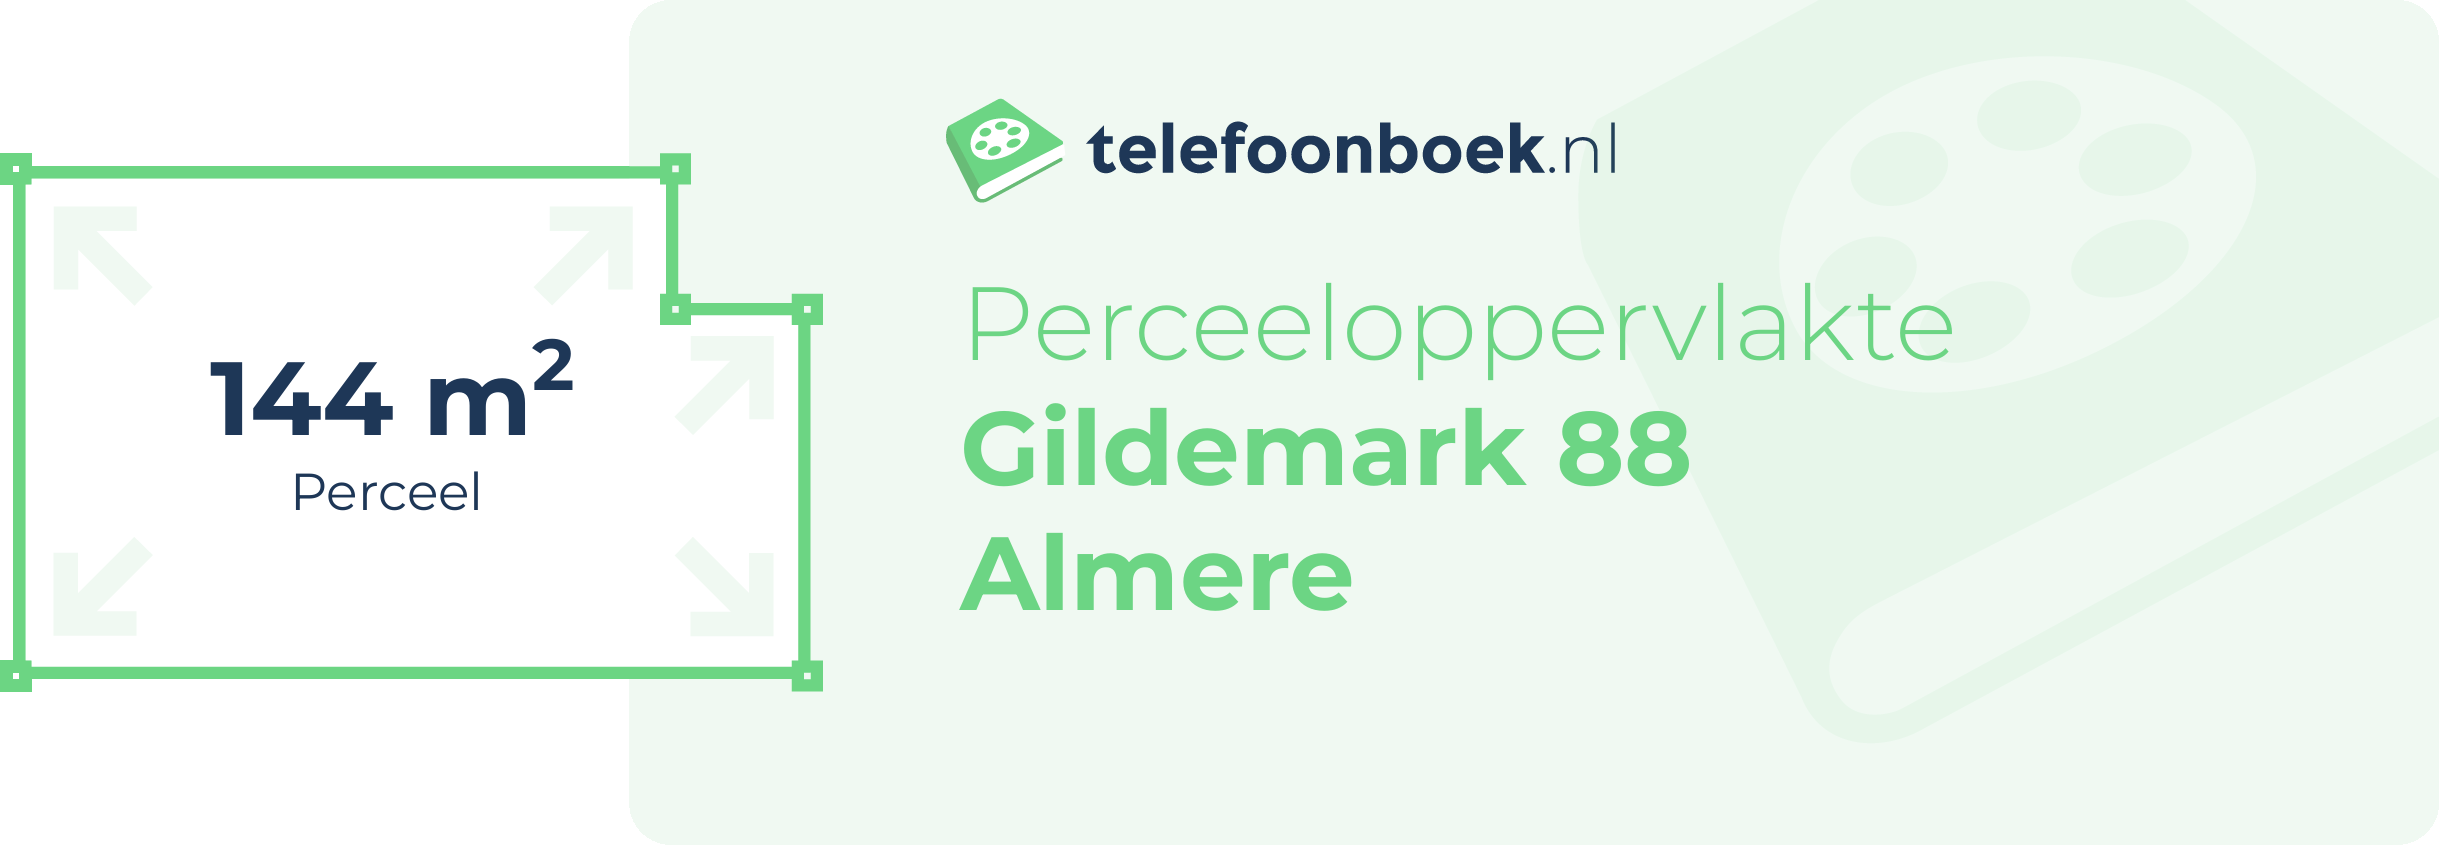 Perceeloppervlakte Gildemark 88 Almere